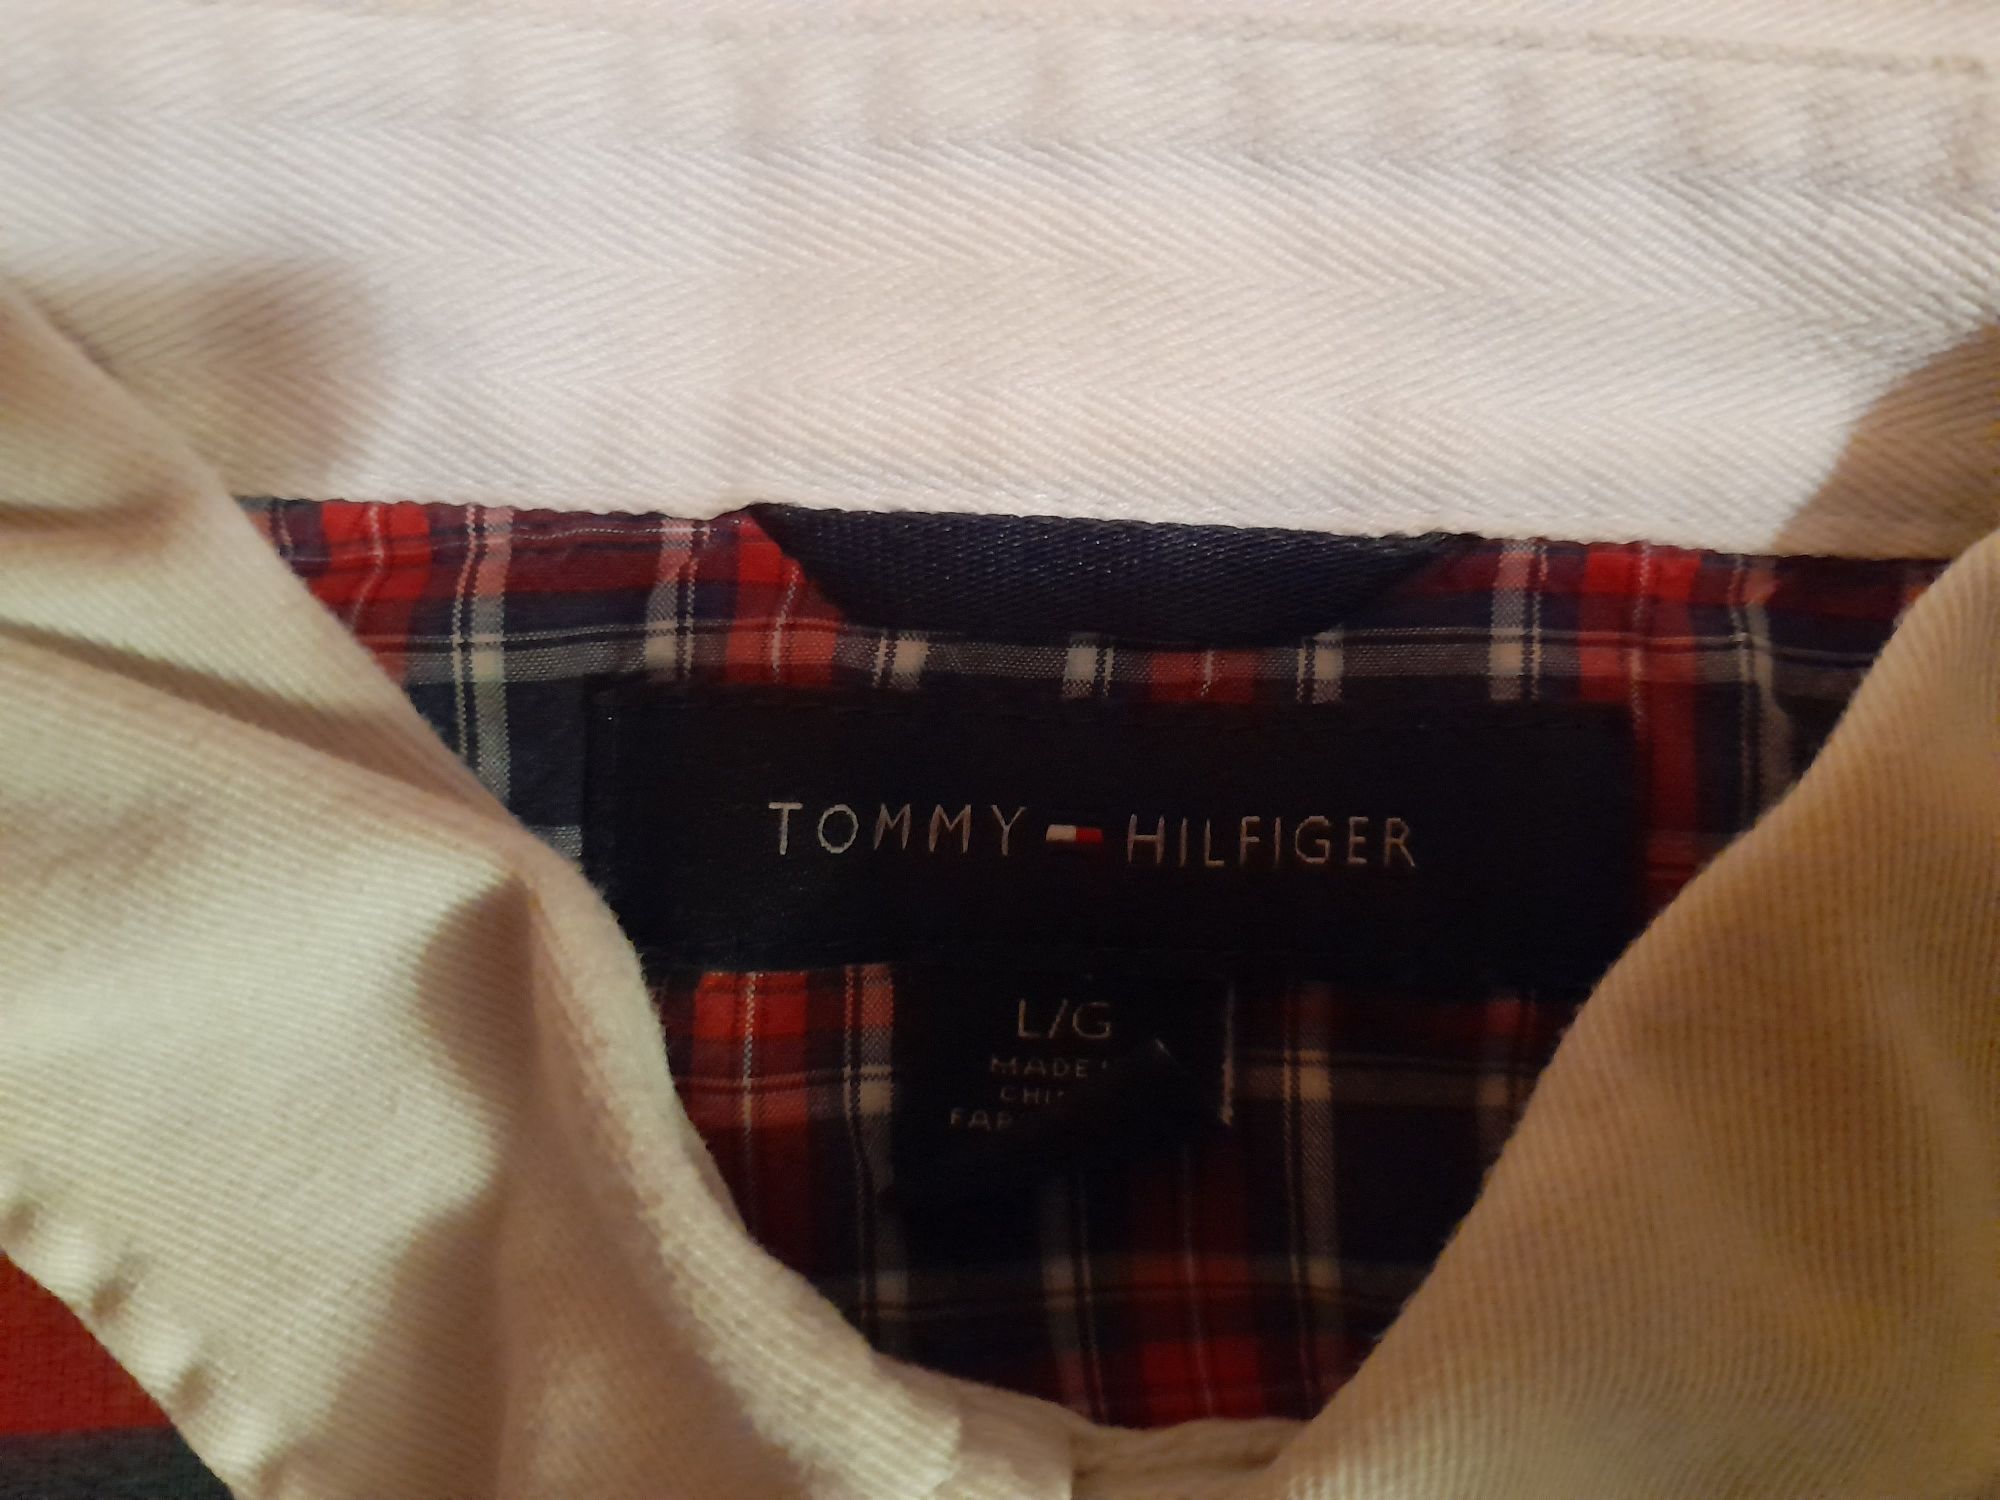 Tommy Hilfiger bluza rozmiar L/G